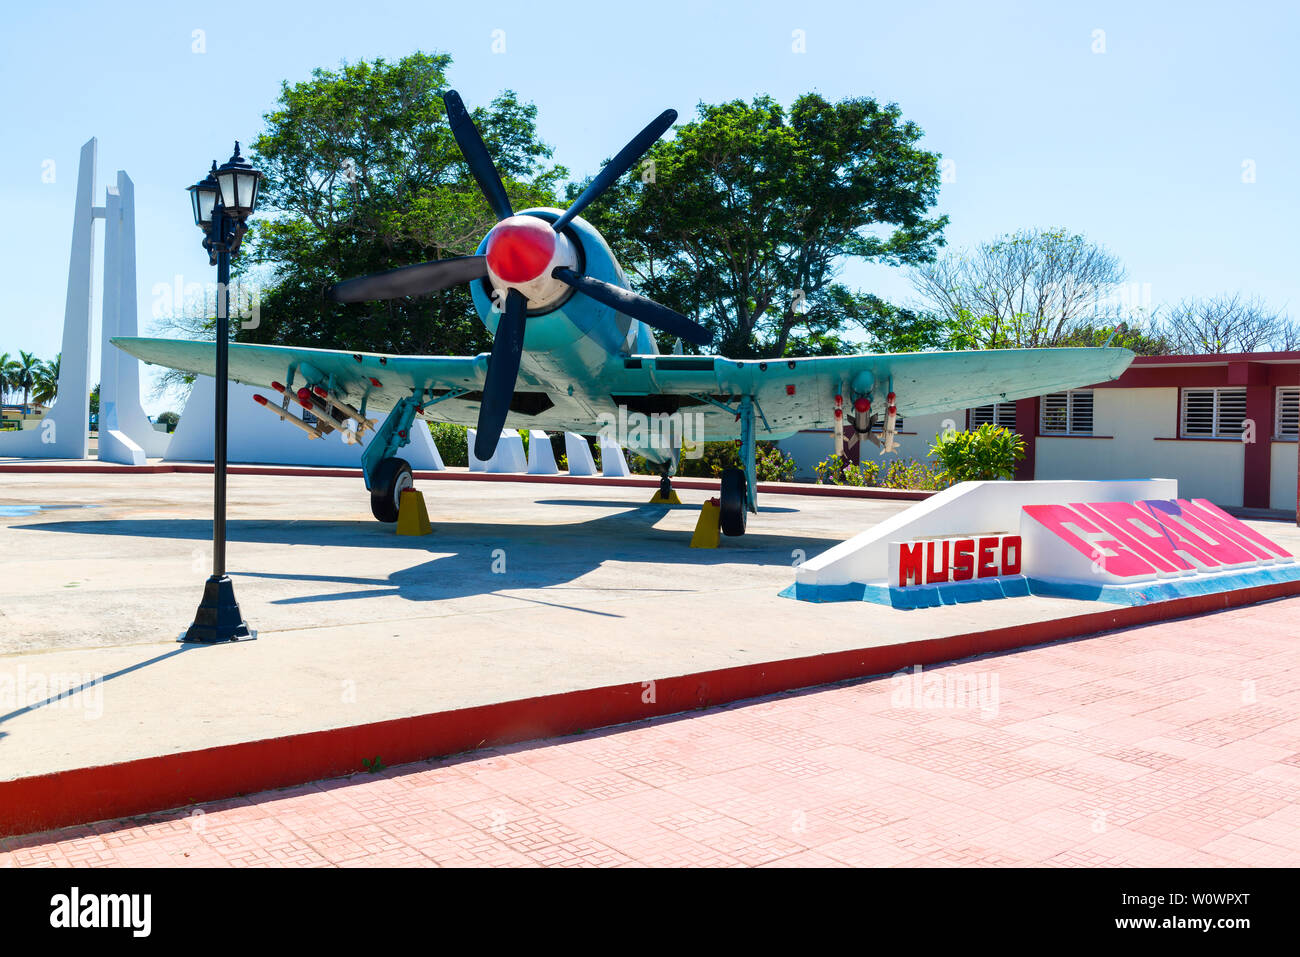 Hawker Sea Fury (British Fighter Aircraft) parcheggiata all'ingresso del Museo de Playa Giron o Baia dei Maiali Museum, Playa Giron, Cuba Foto Stock